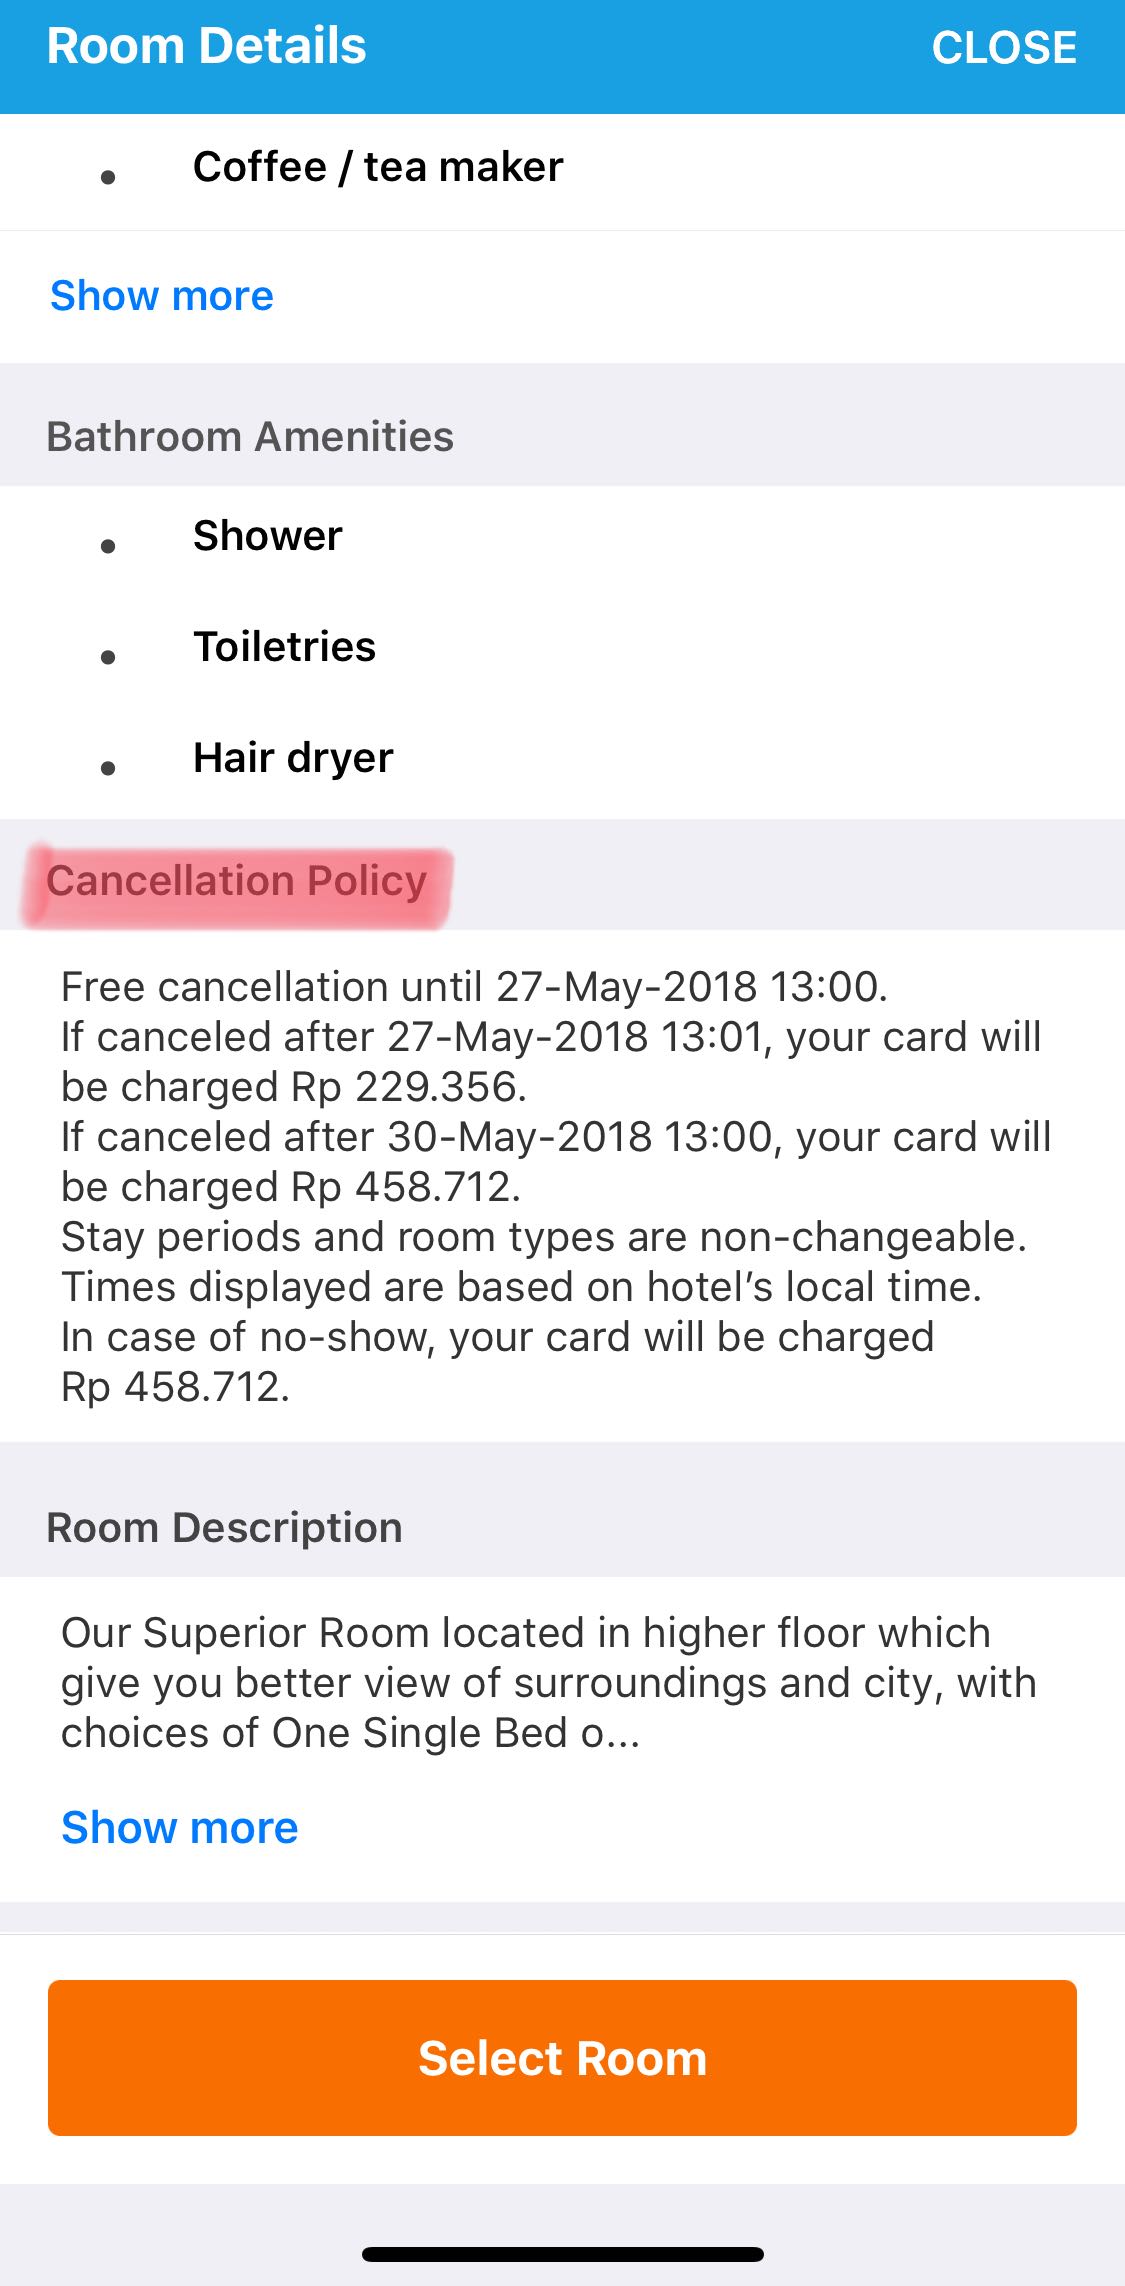 Cancellation Policy Tiap Hotel Berbeda Beda